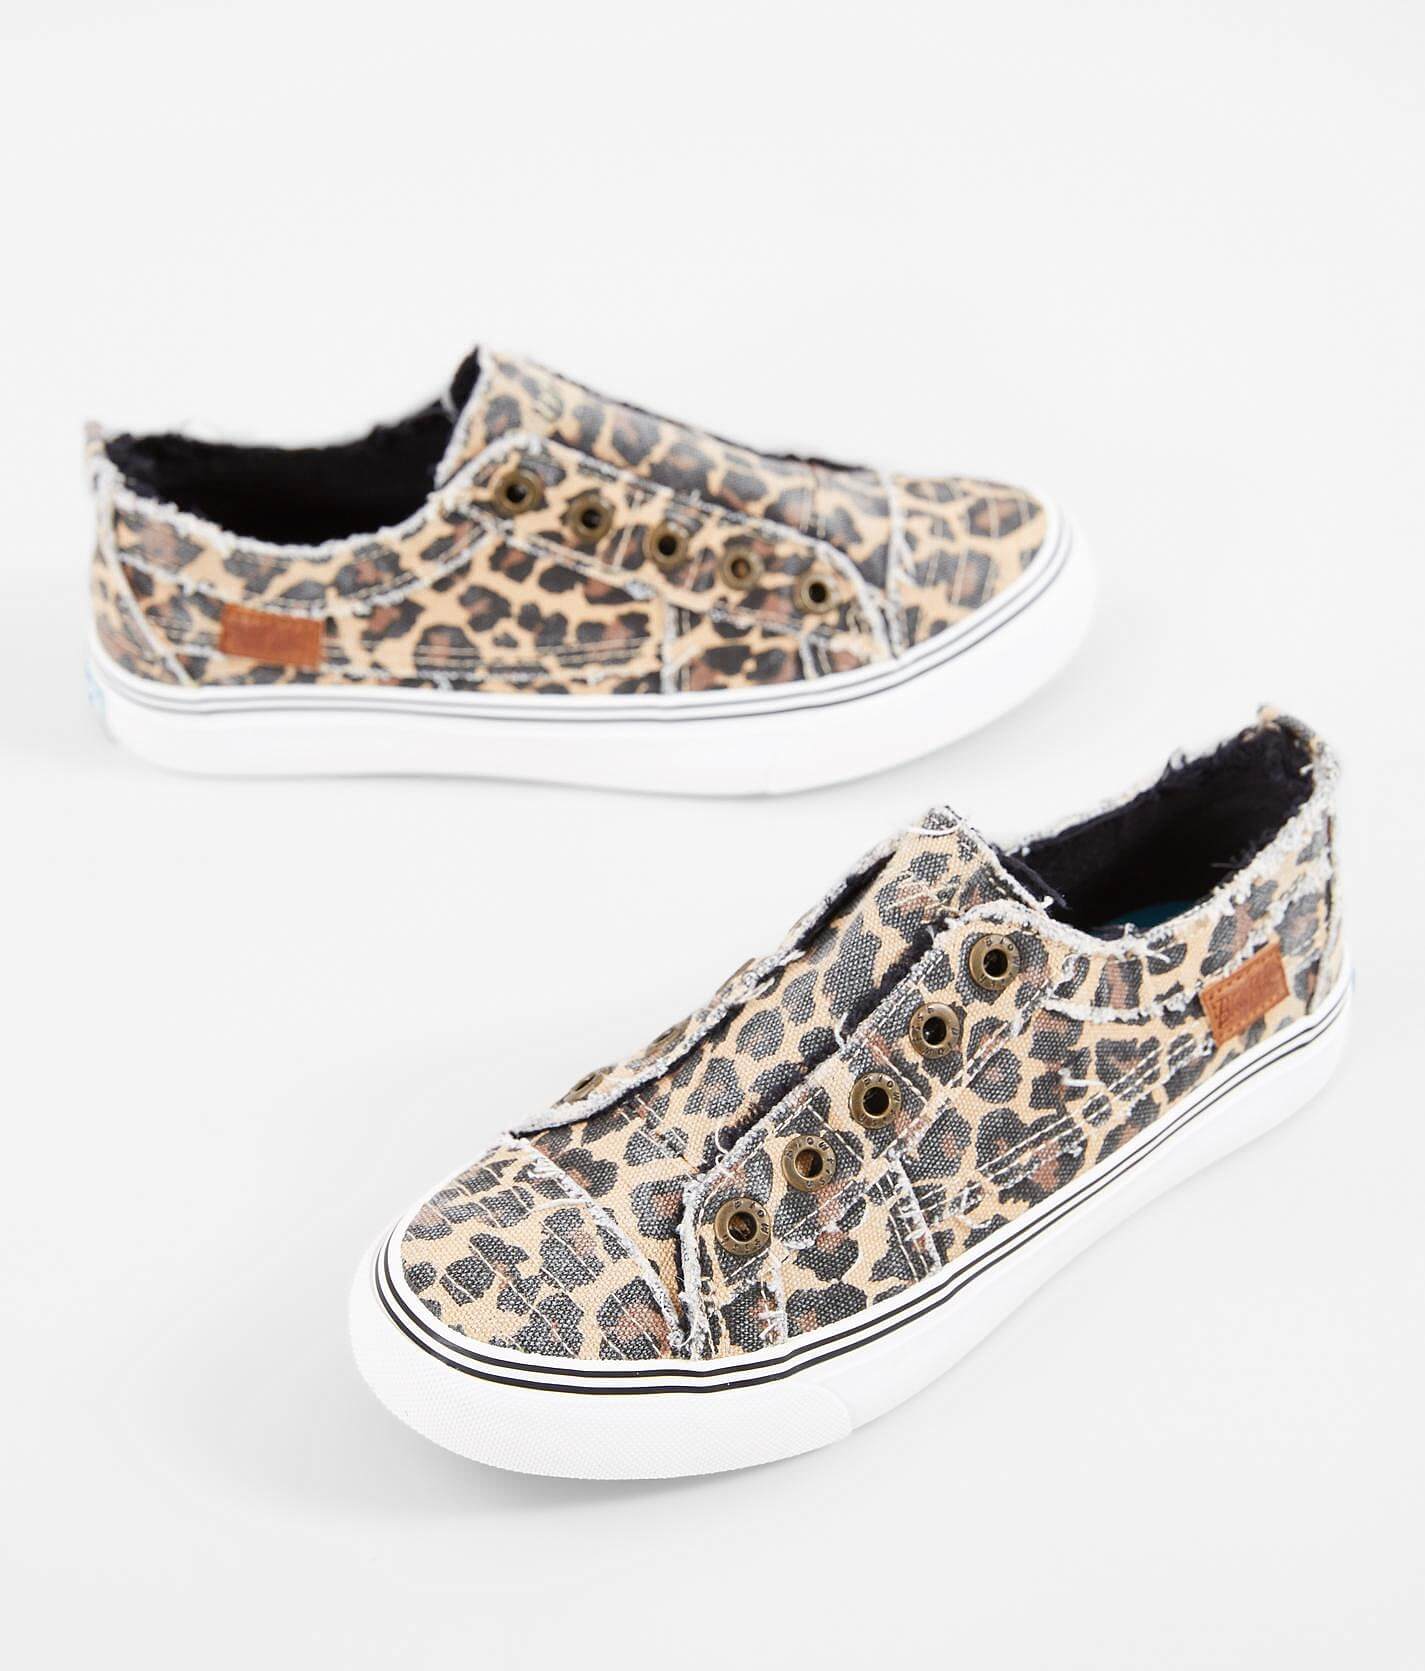 blowfish cheetah sneakers